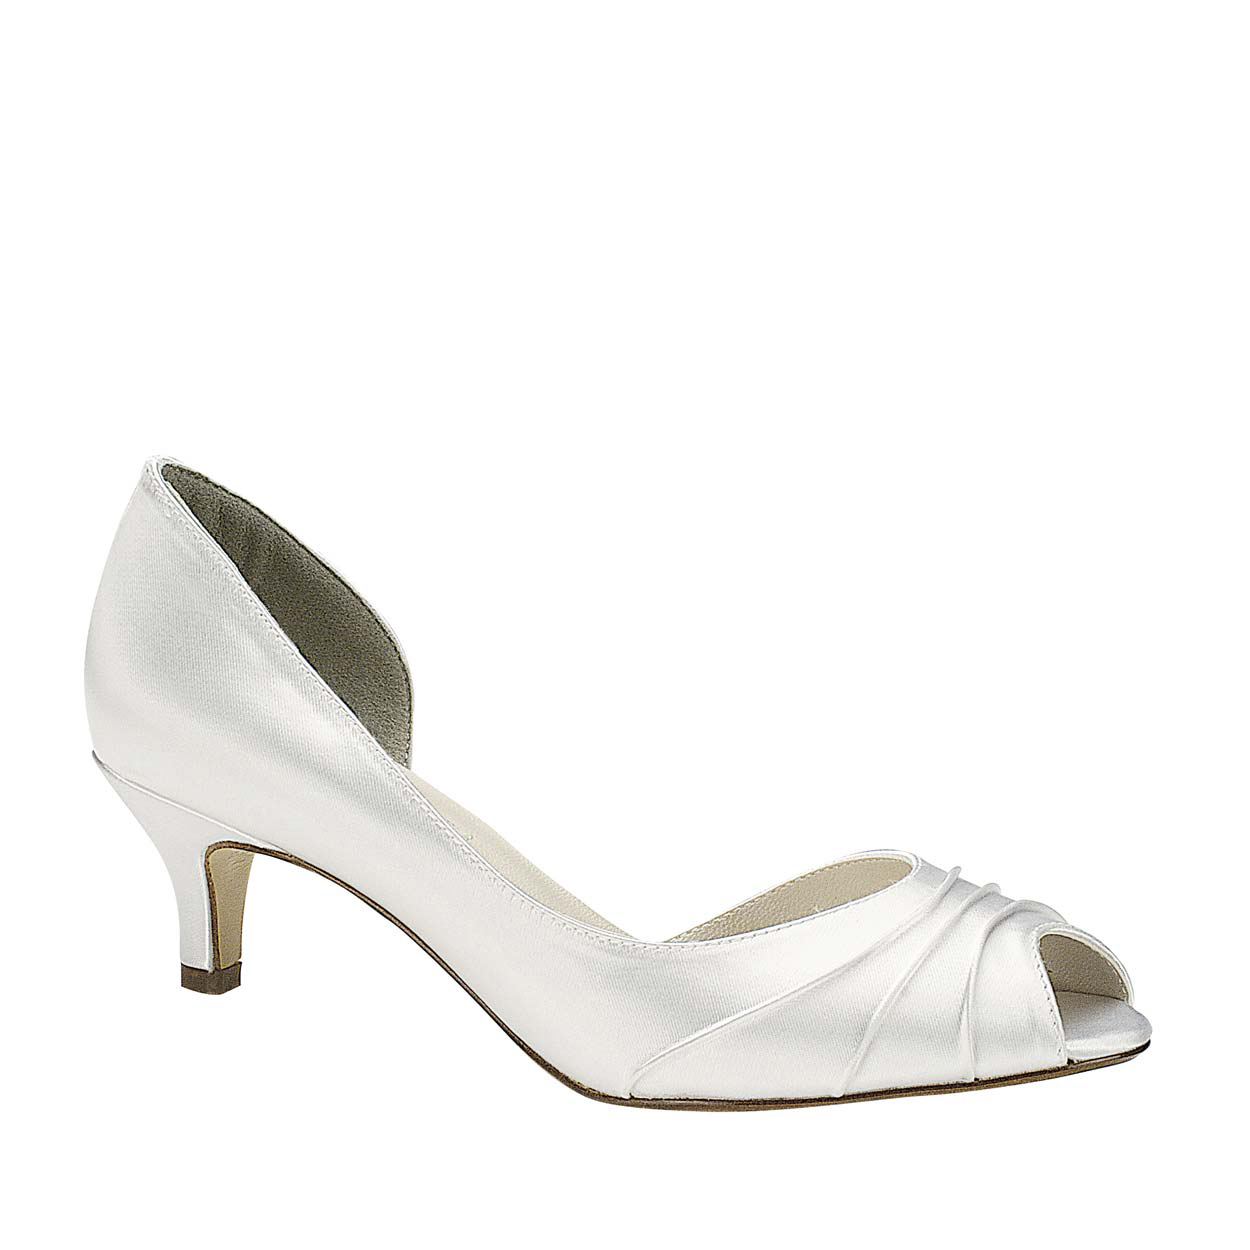 Anna Field High heels - off-white - Zalando.co.uk